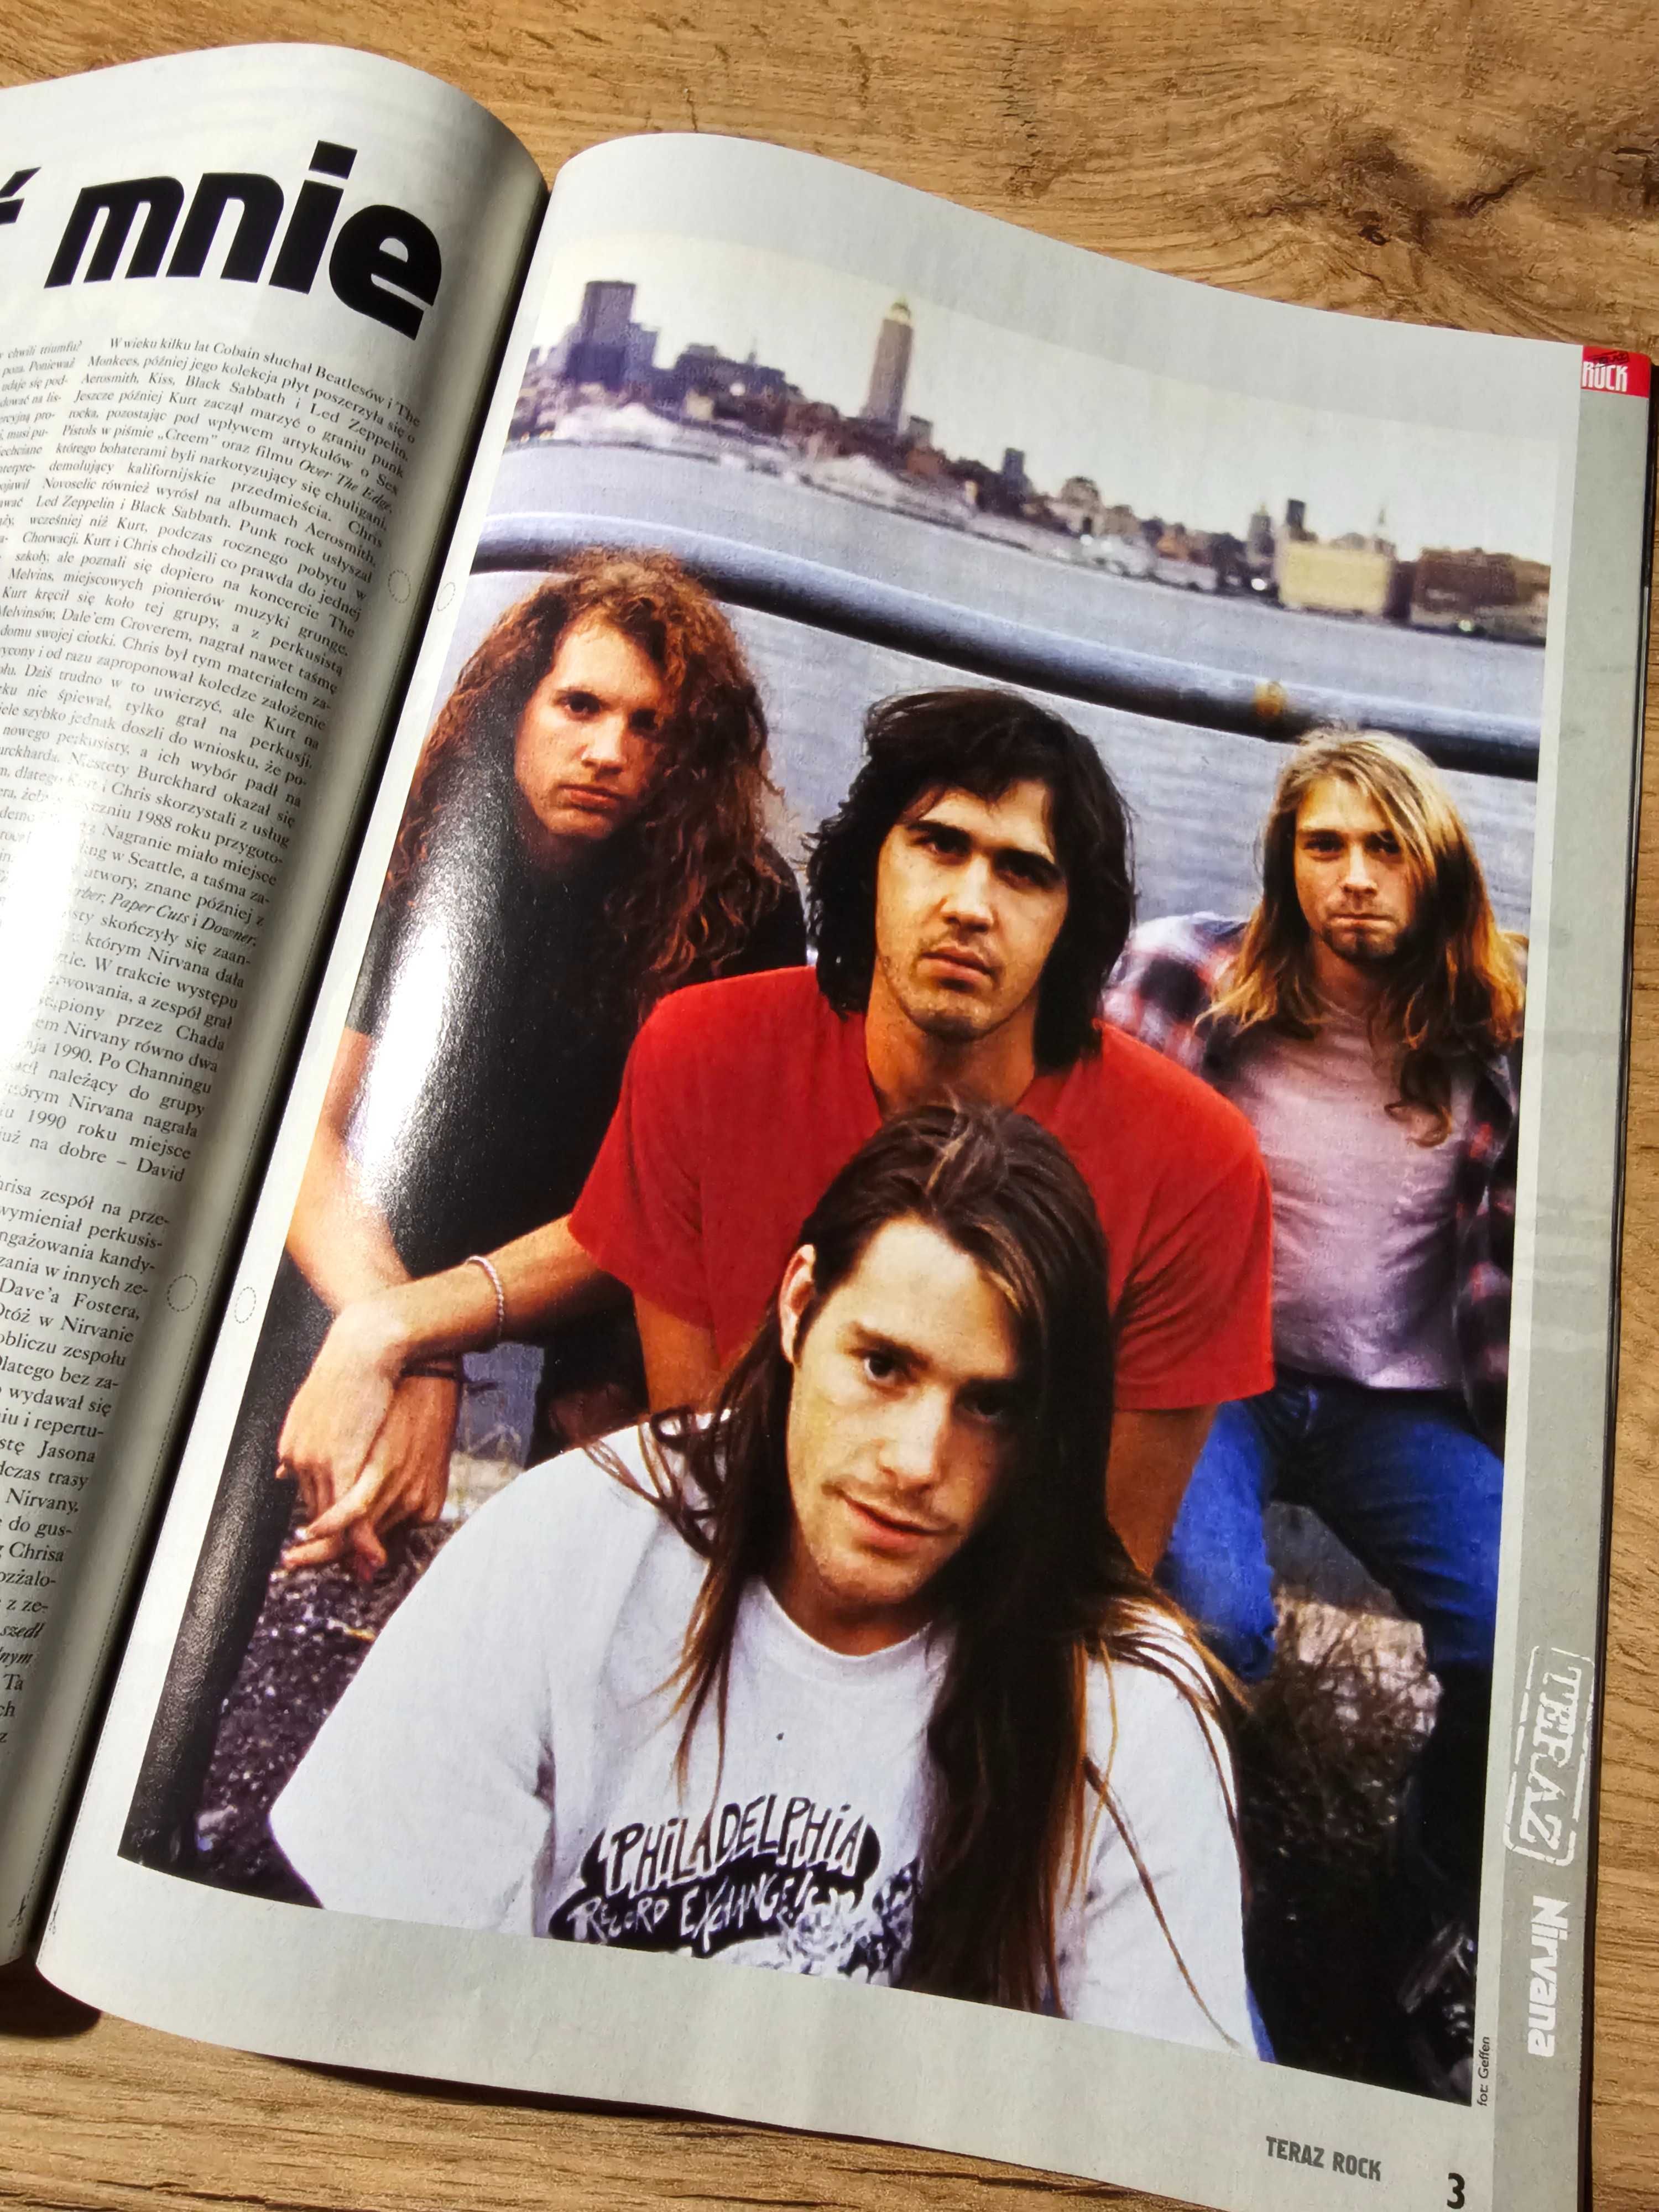 UNIKAT! Teraz Rock 4 (2) kwiecień 2003 - Nirvana, Metallica